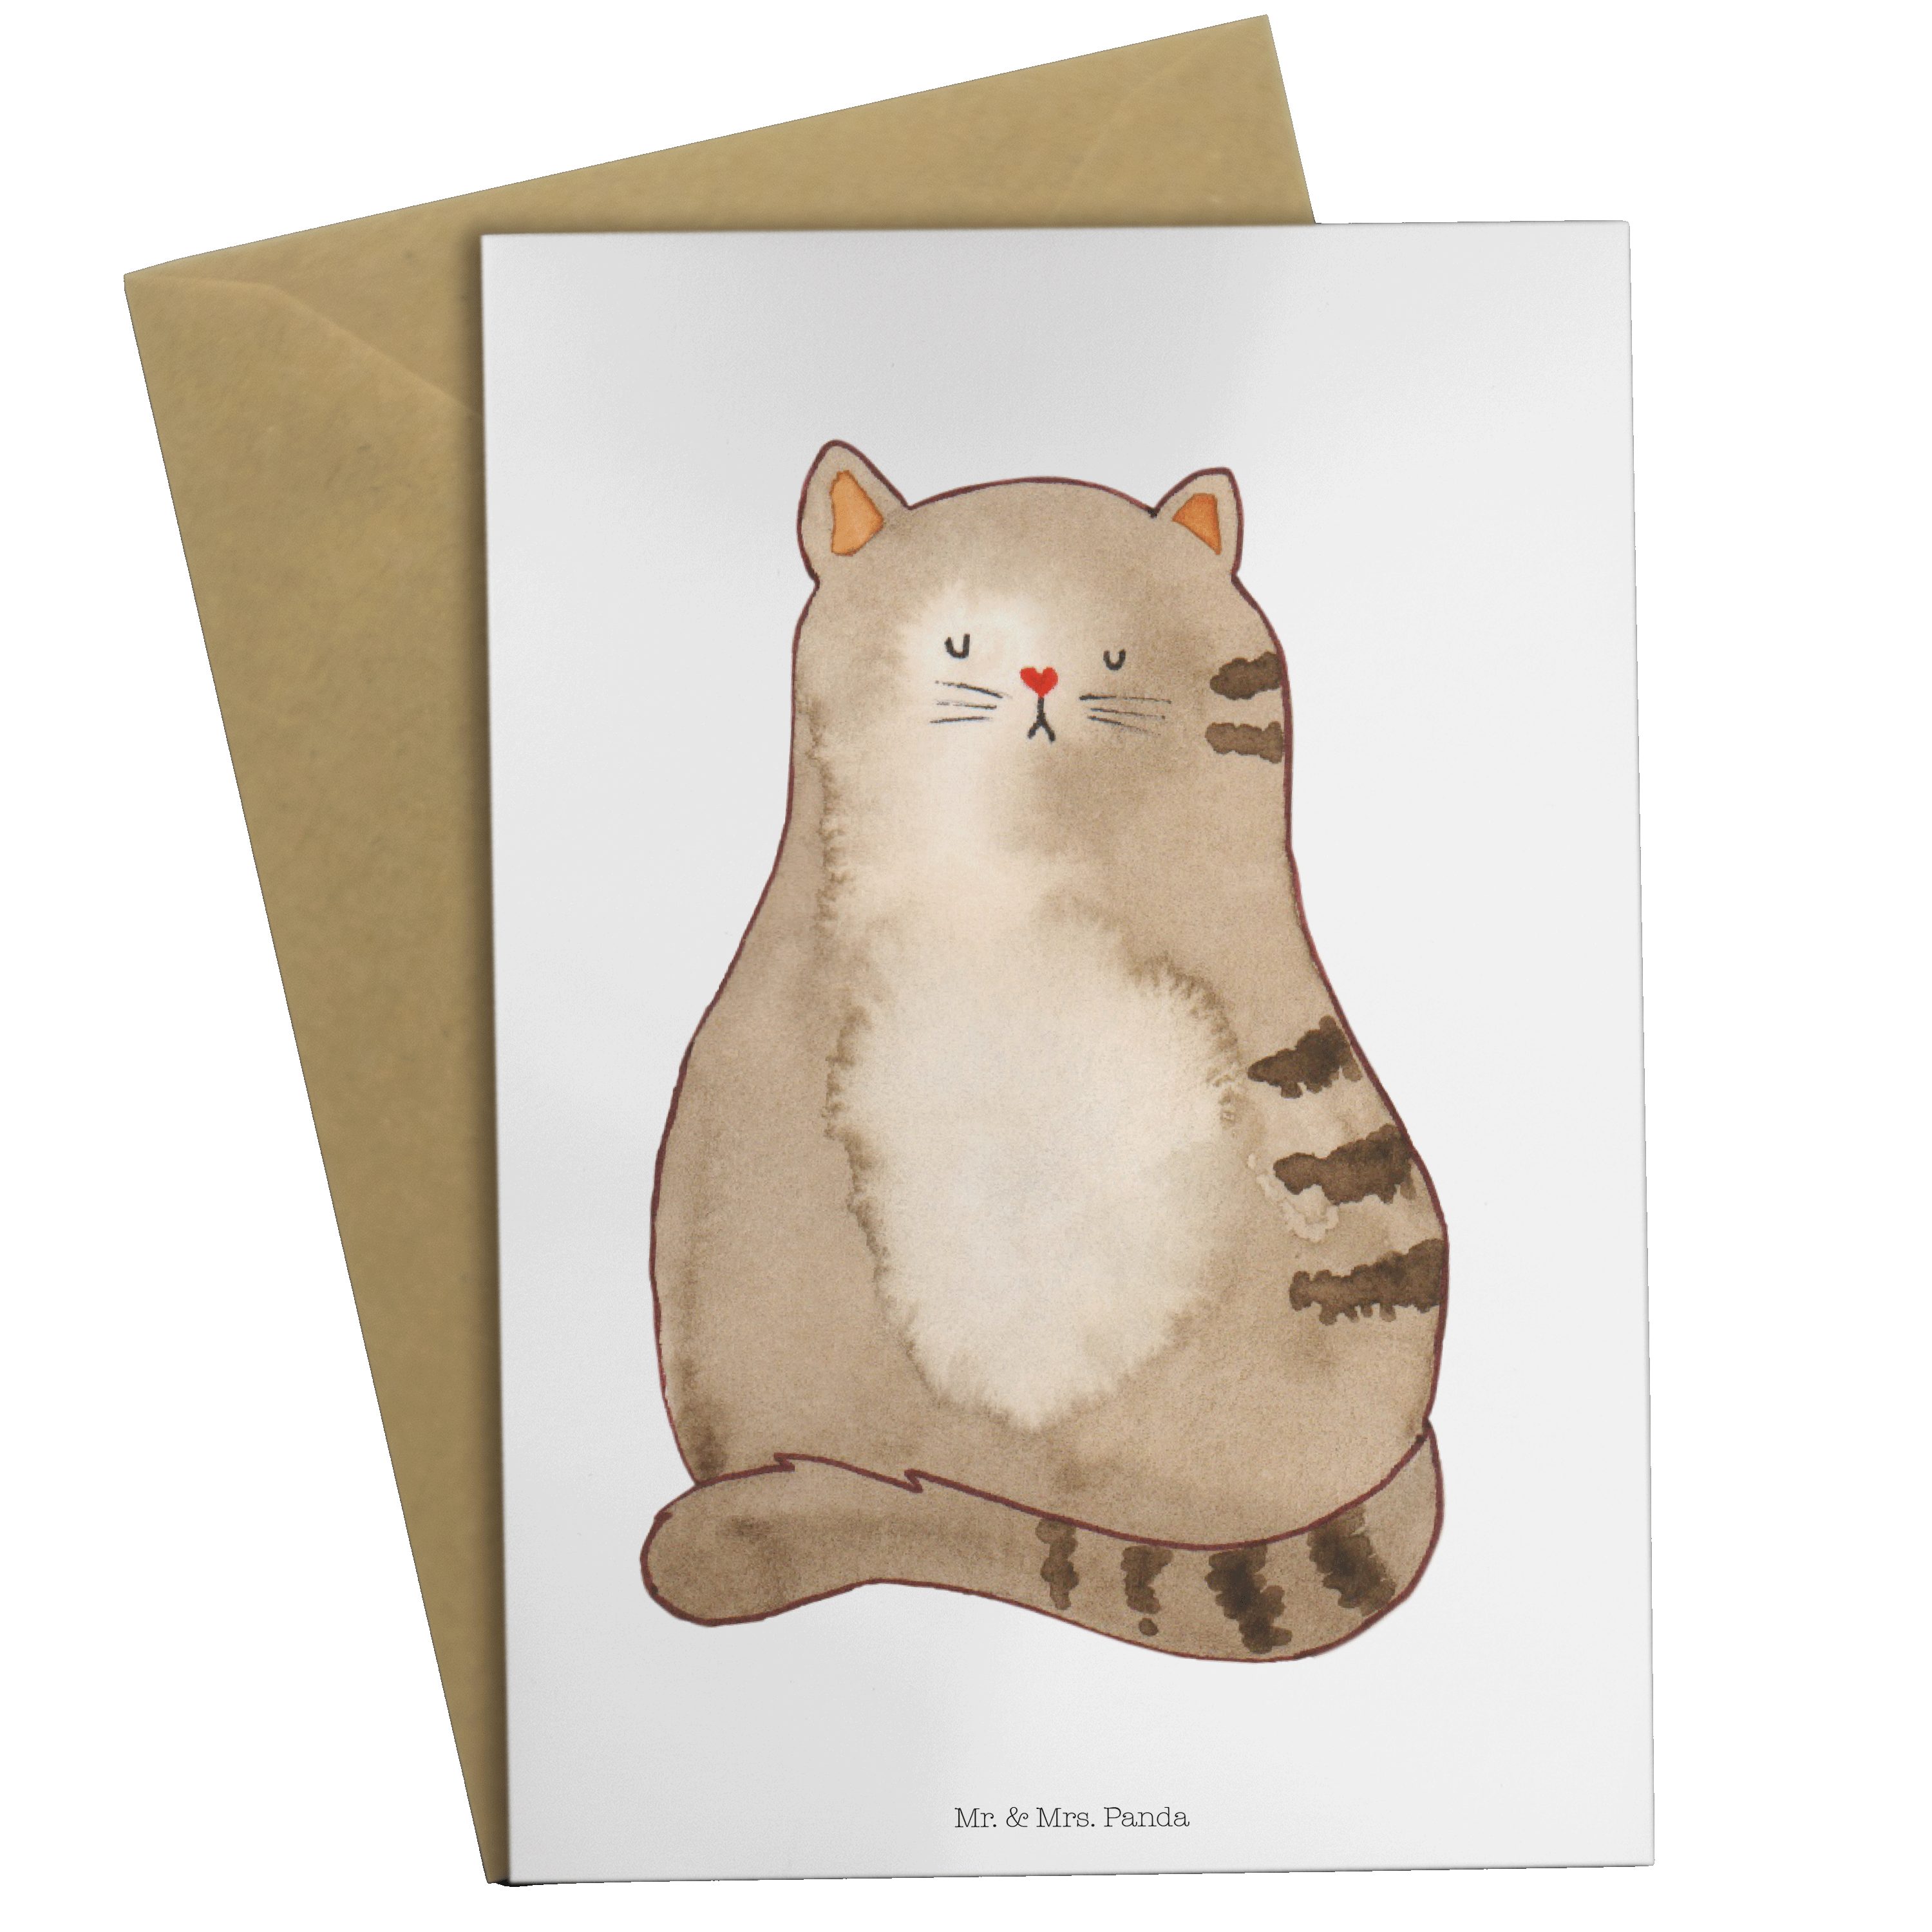 Mr. & Mrs. Panda Grußkarte Katze sitzend - Weiß - Geschenk, Hochzeitskarte, Karte, Katzendeko, K